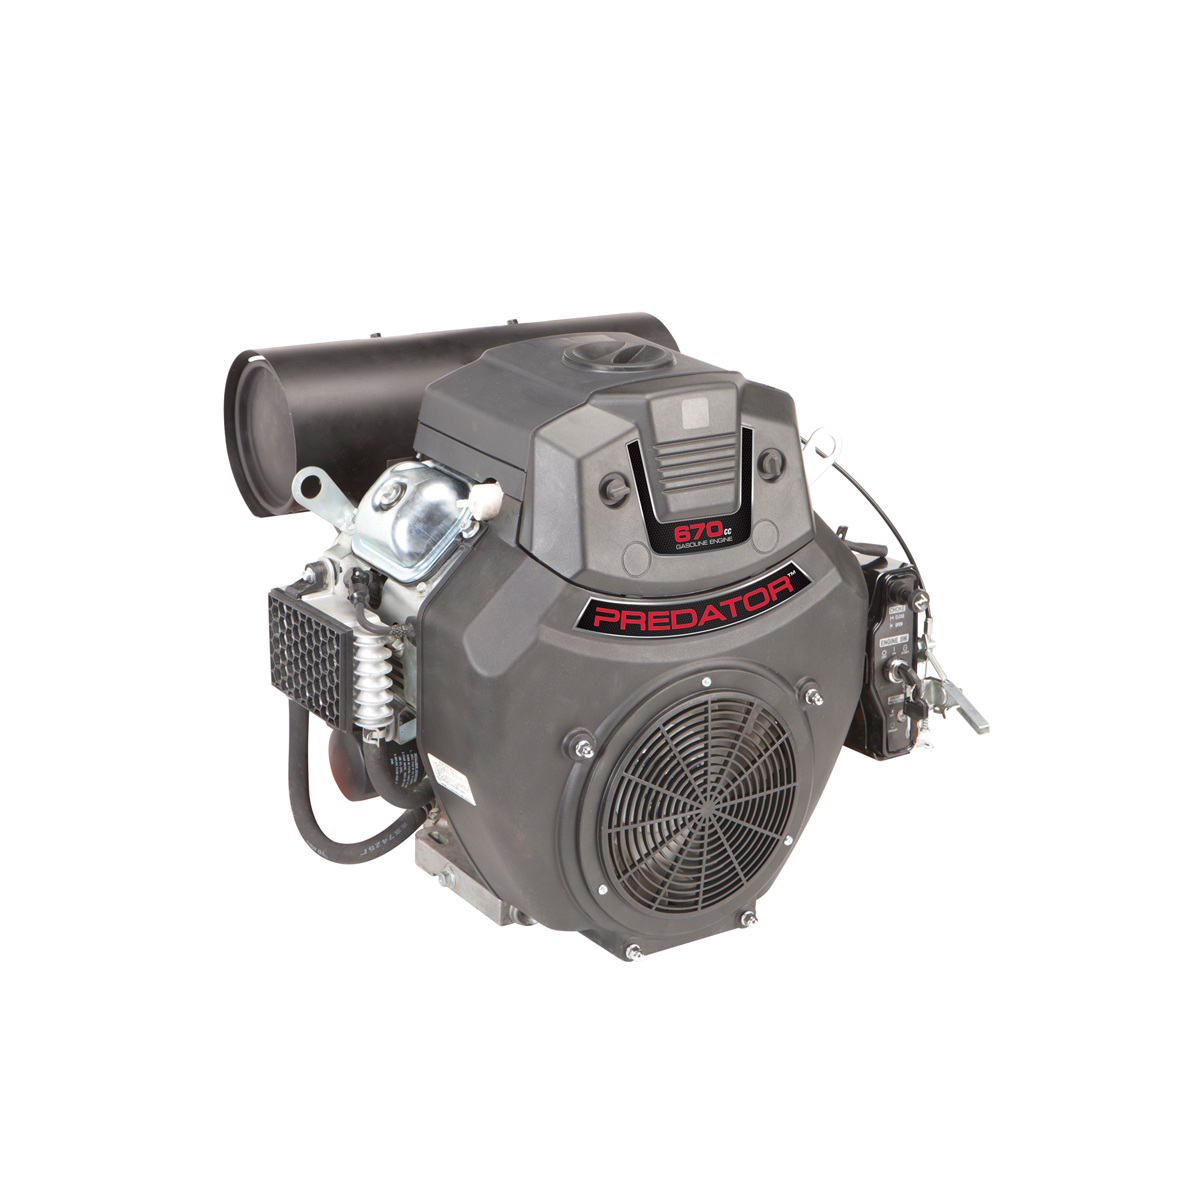 PREDATOR 22 HP (670cc) V-Twin Horizontal Shaft Gas Engine EPA - Item 61614